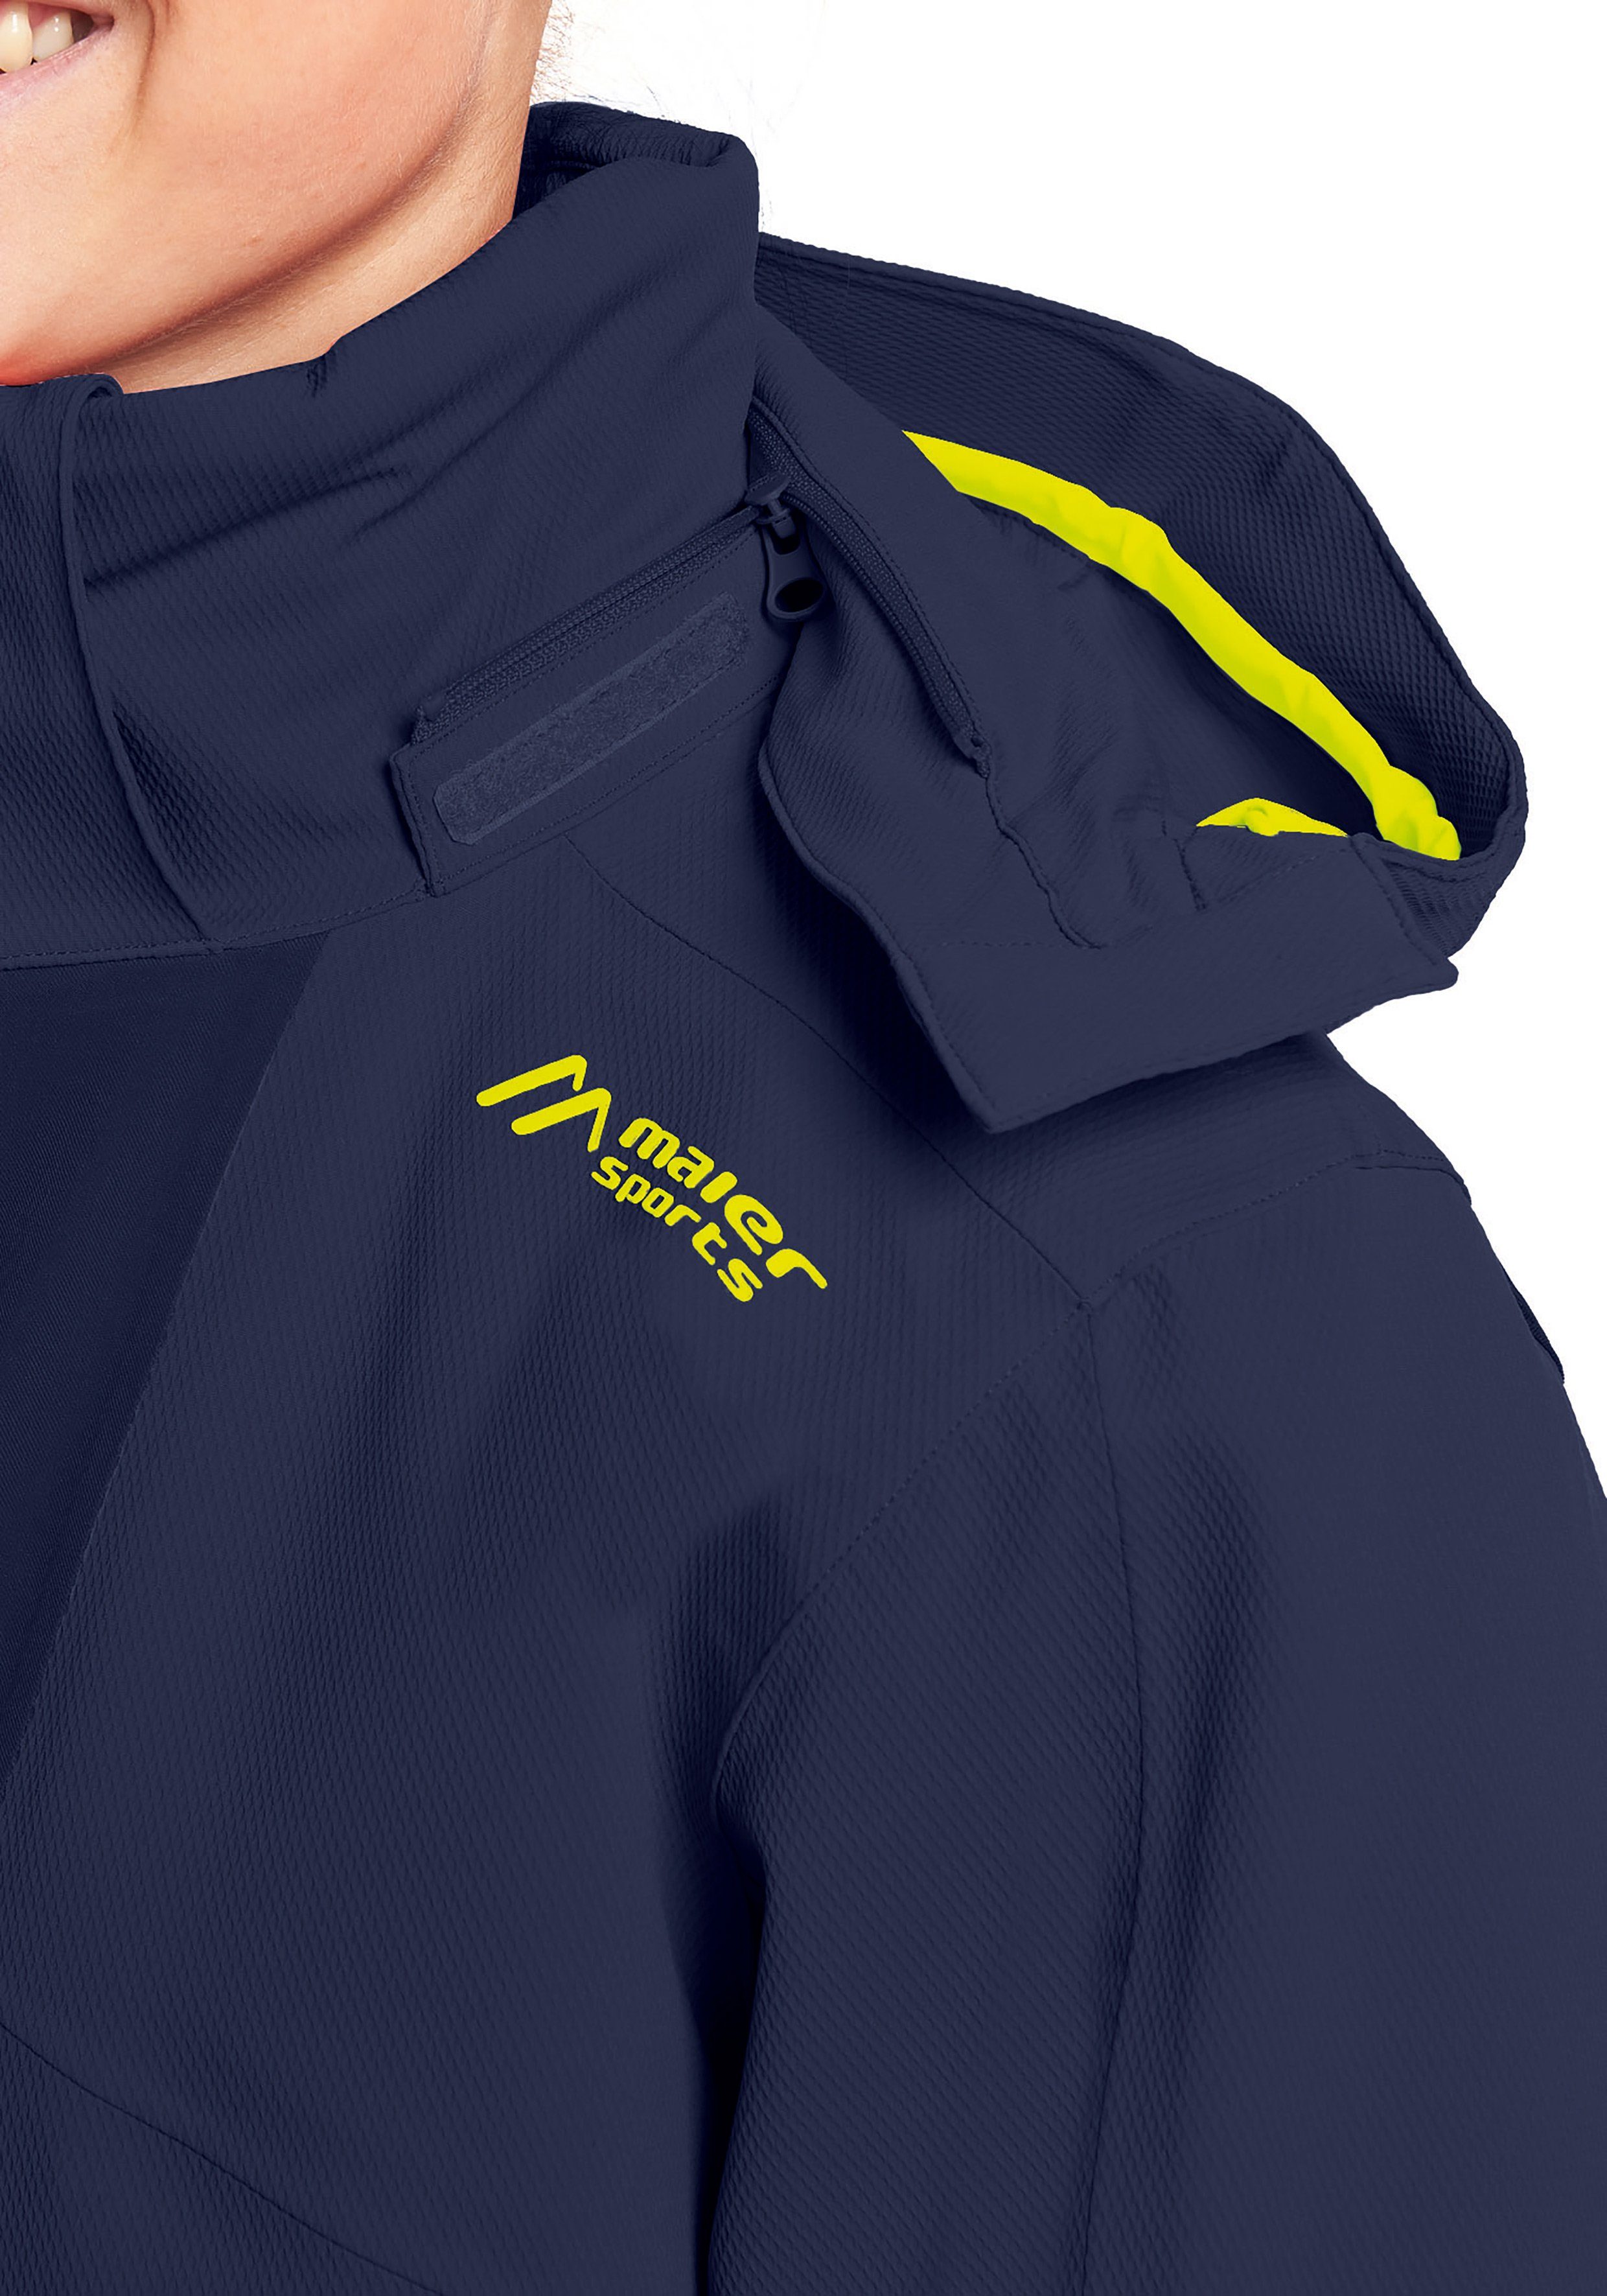 Sports Impulse perfekt – Maier Piste dunkelblau Fast für Skijacke Skijacke Freeride Modern und designte W